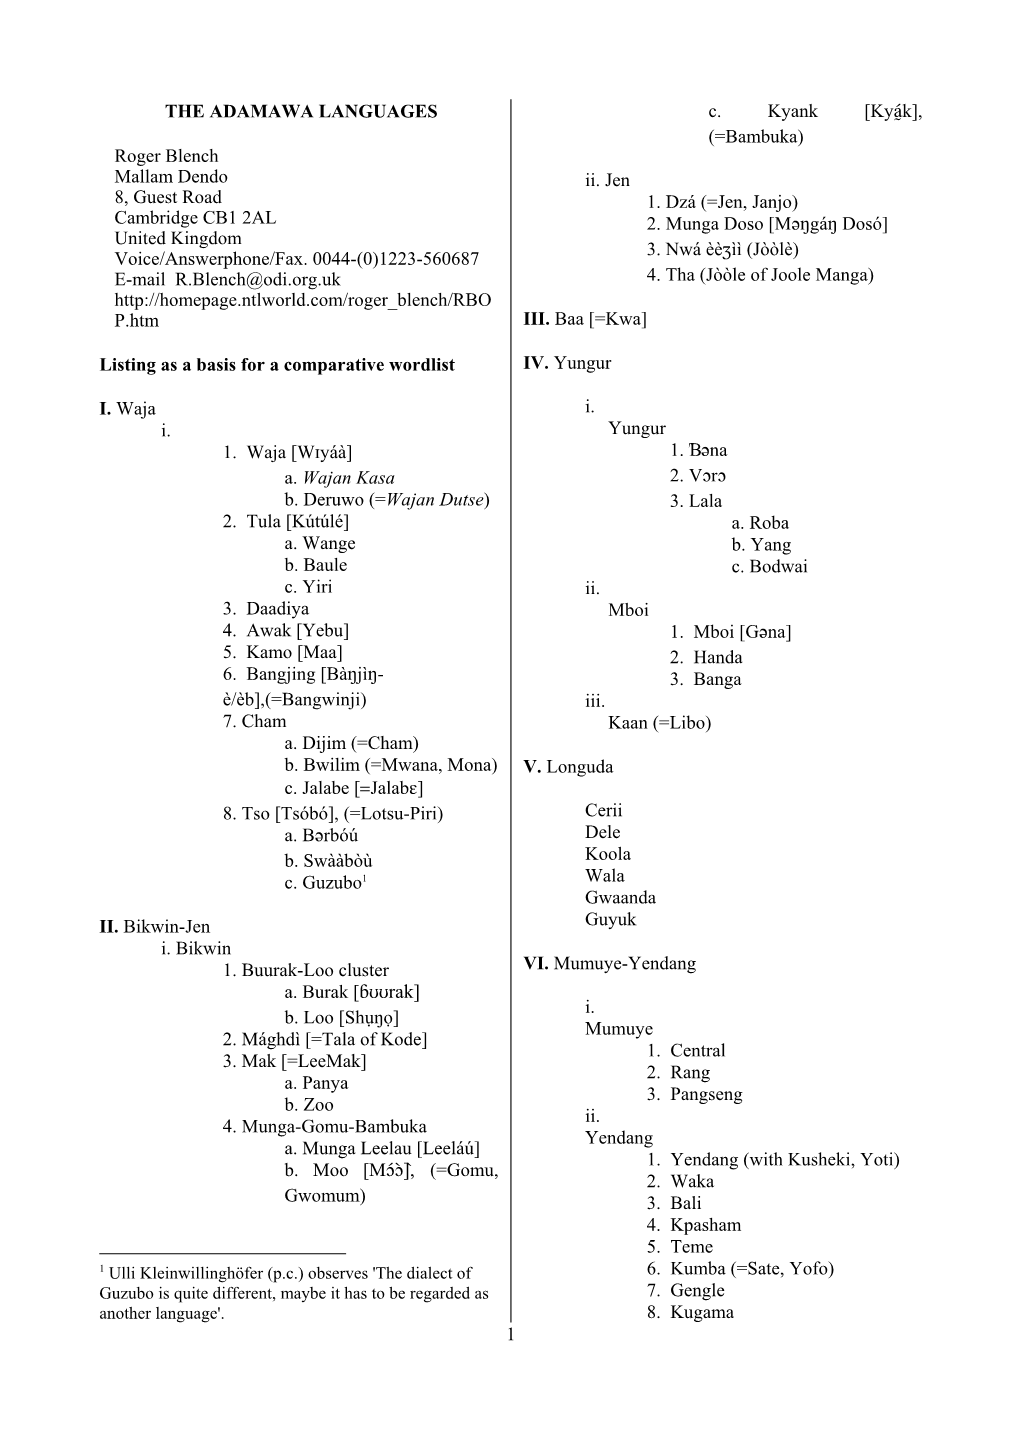 List of Adamawa Languages